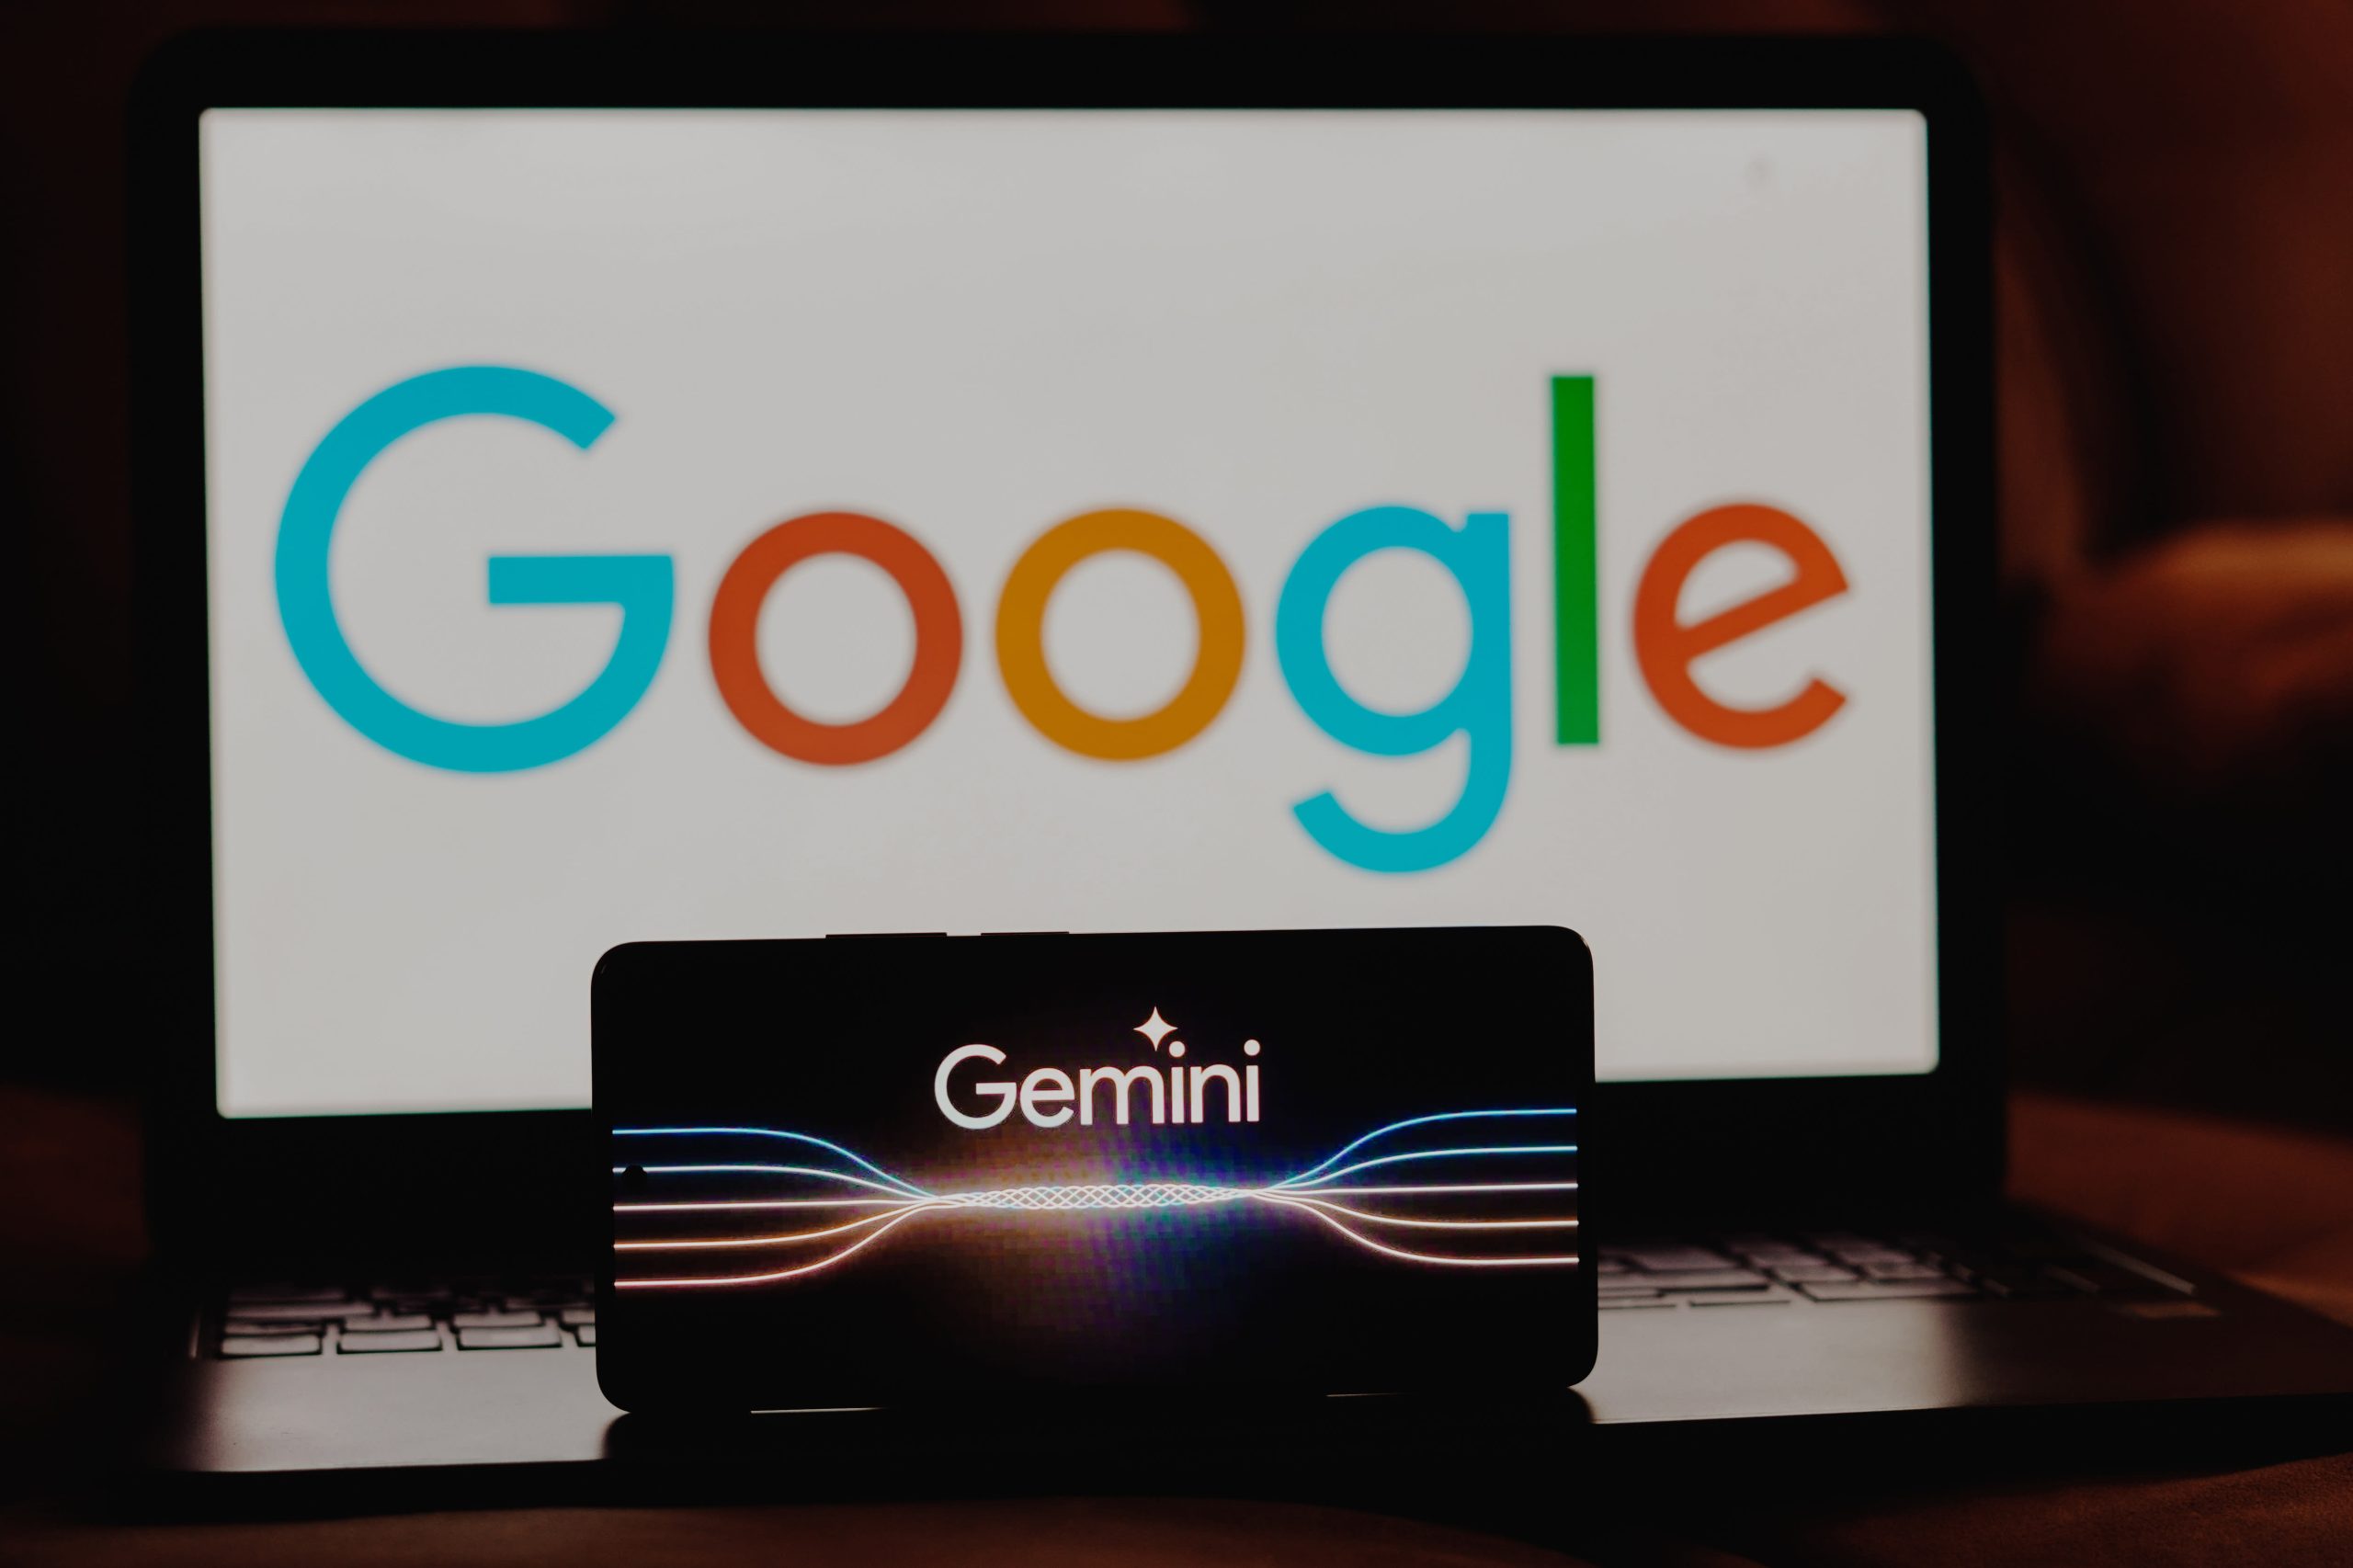 Google's Gemini AI Video Sparks Controversy Over Misrepresented Capabilities